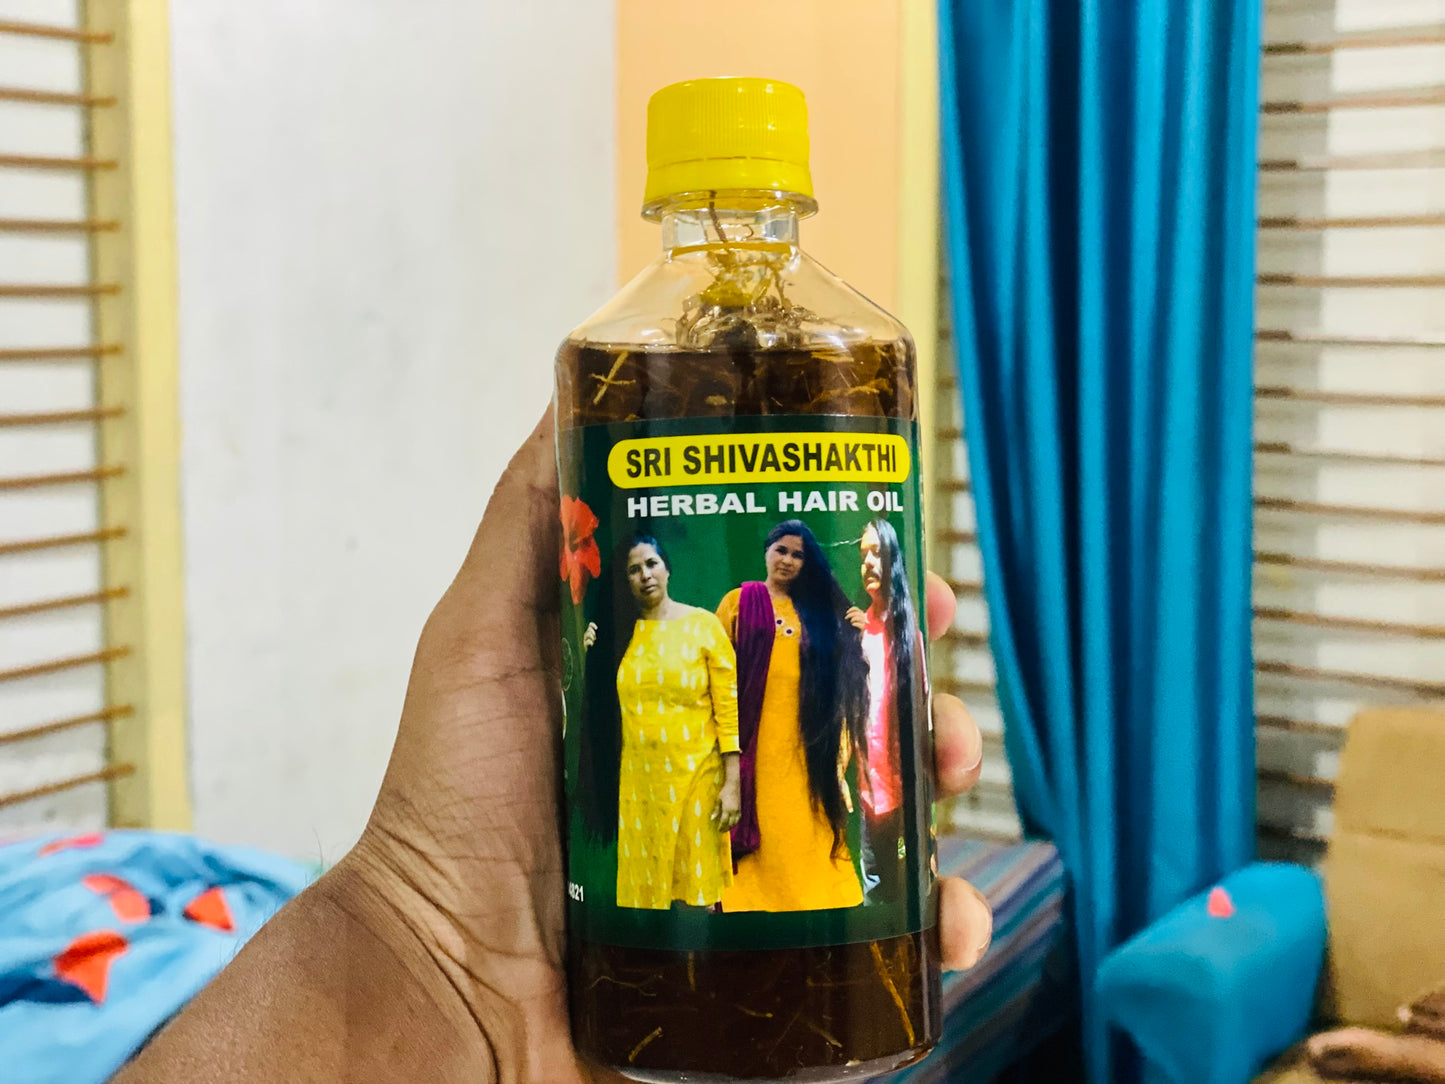 Sri Shiva Shakthi Hair Oil